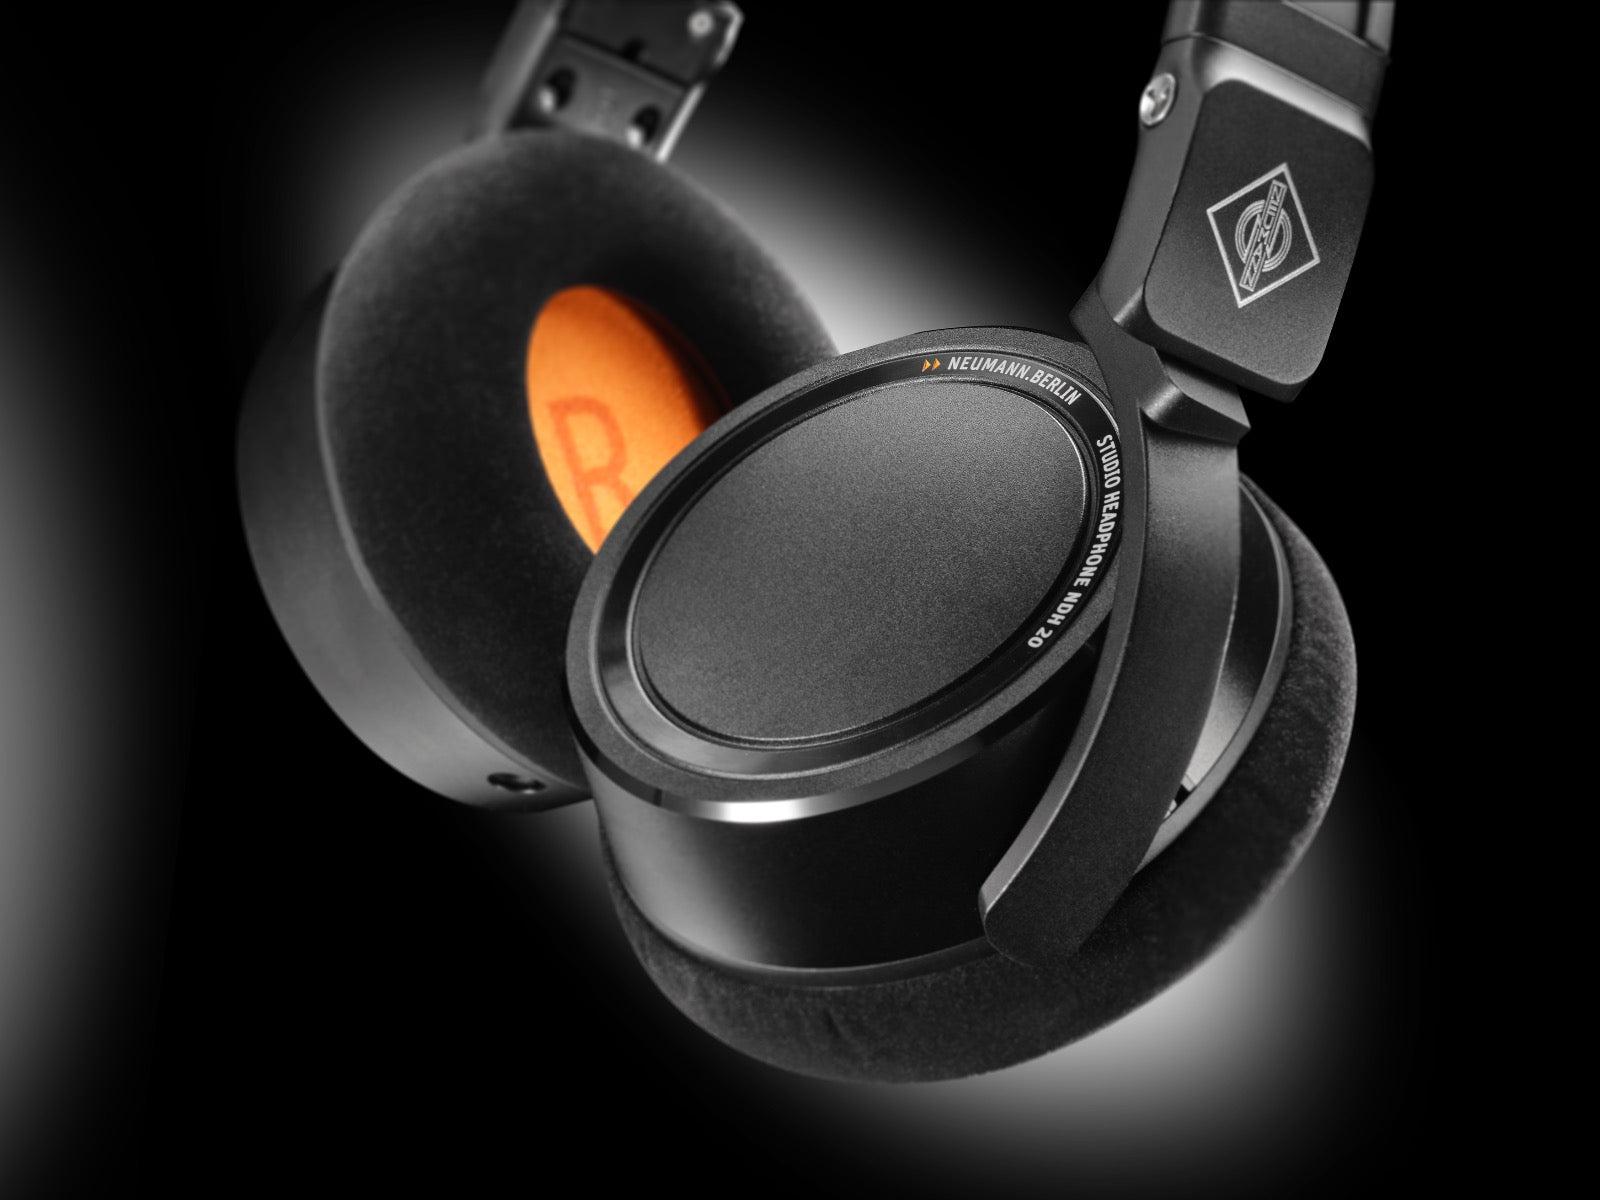 Neumann NDH 20 Studio Closed back headphones - Black Edition, View 6